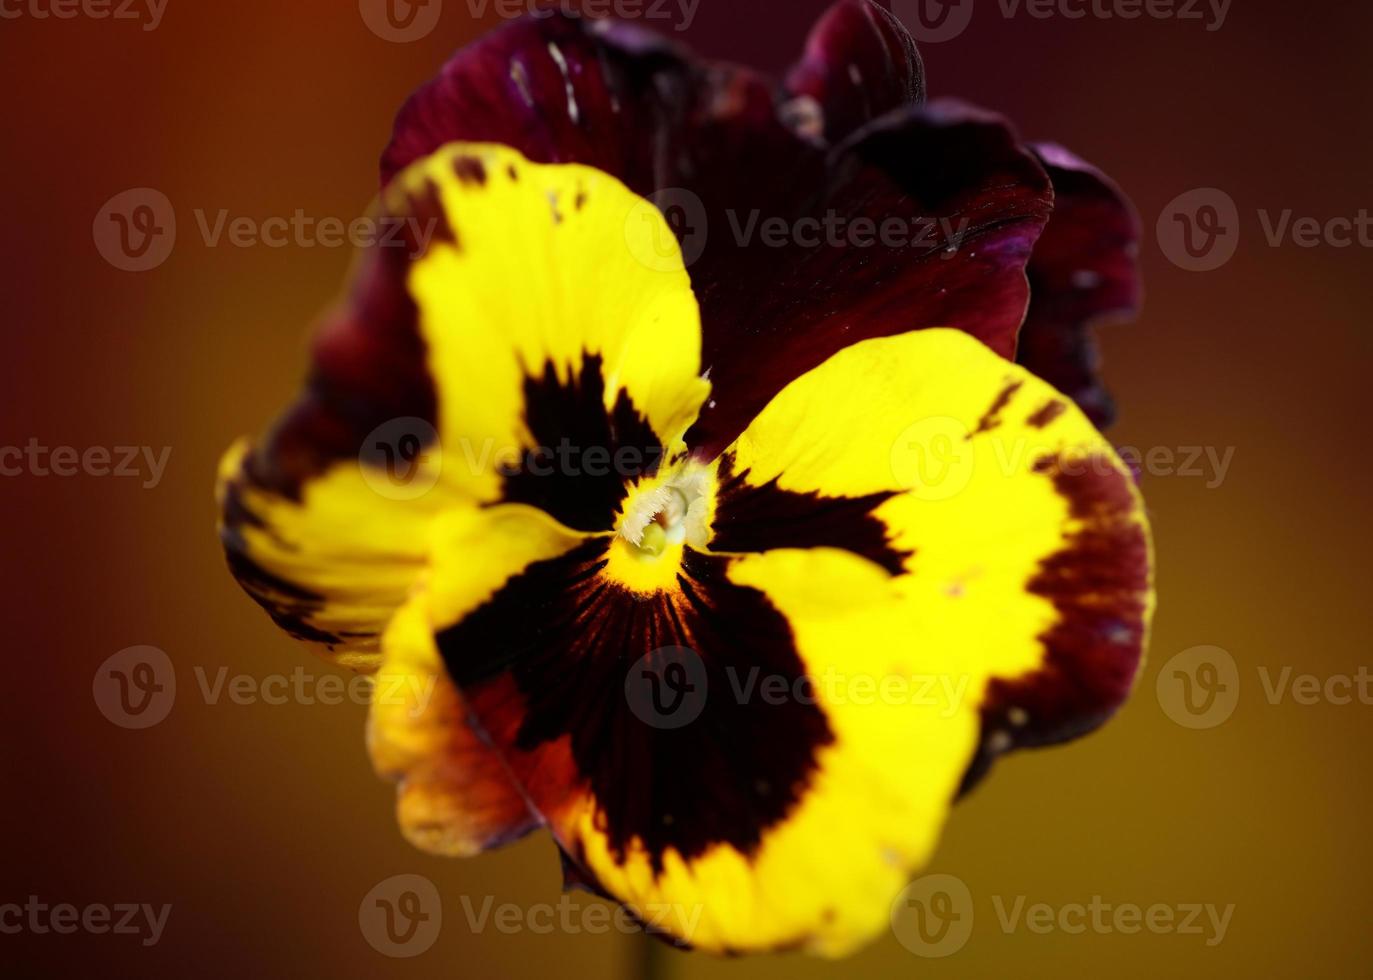 altviool bloem bloesem familie violaceae close-up botanische print foto